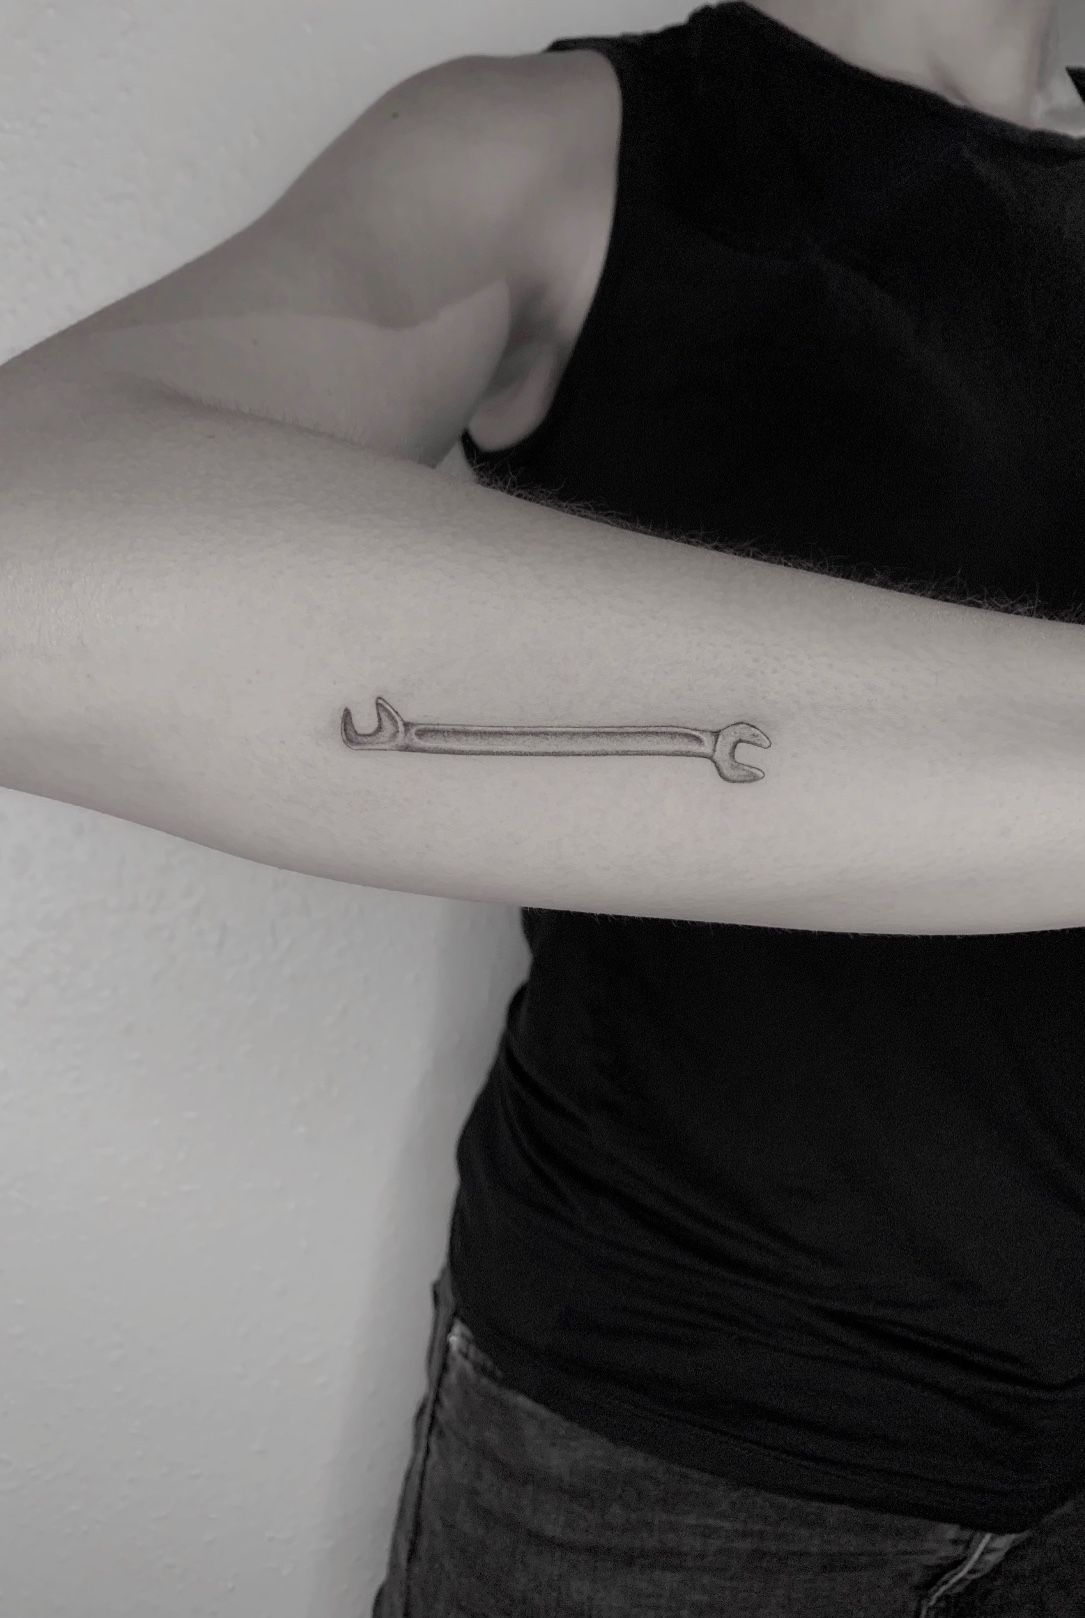 wrench - Object Tattoos - Last Sparrow Tattoo